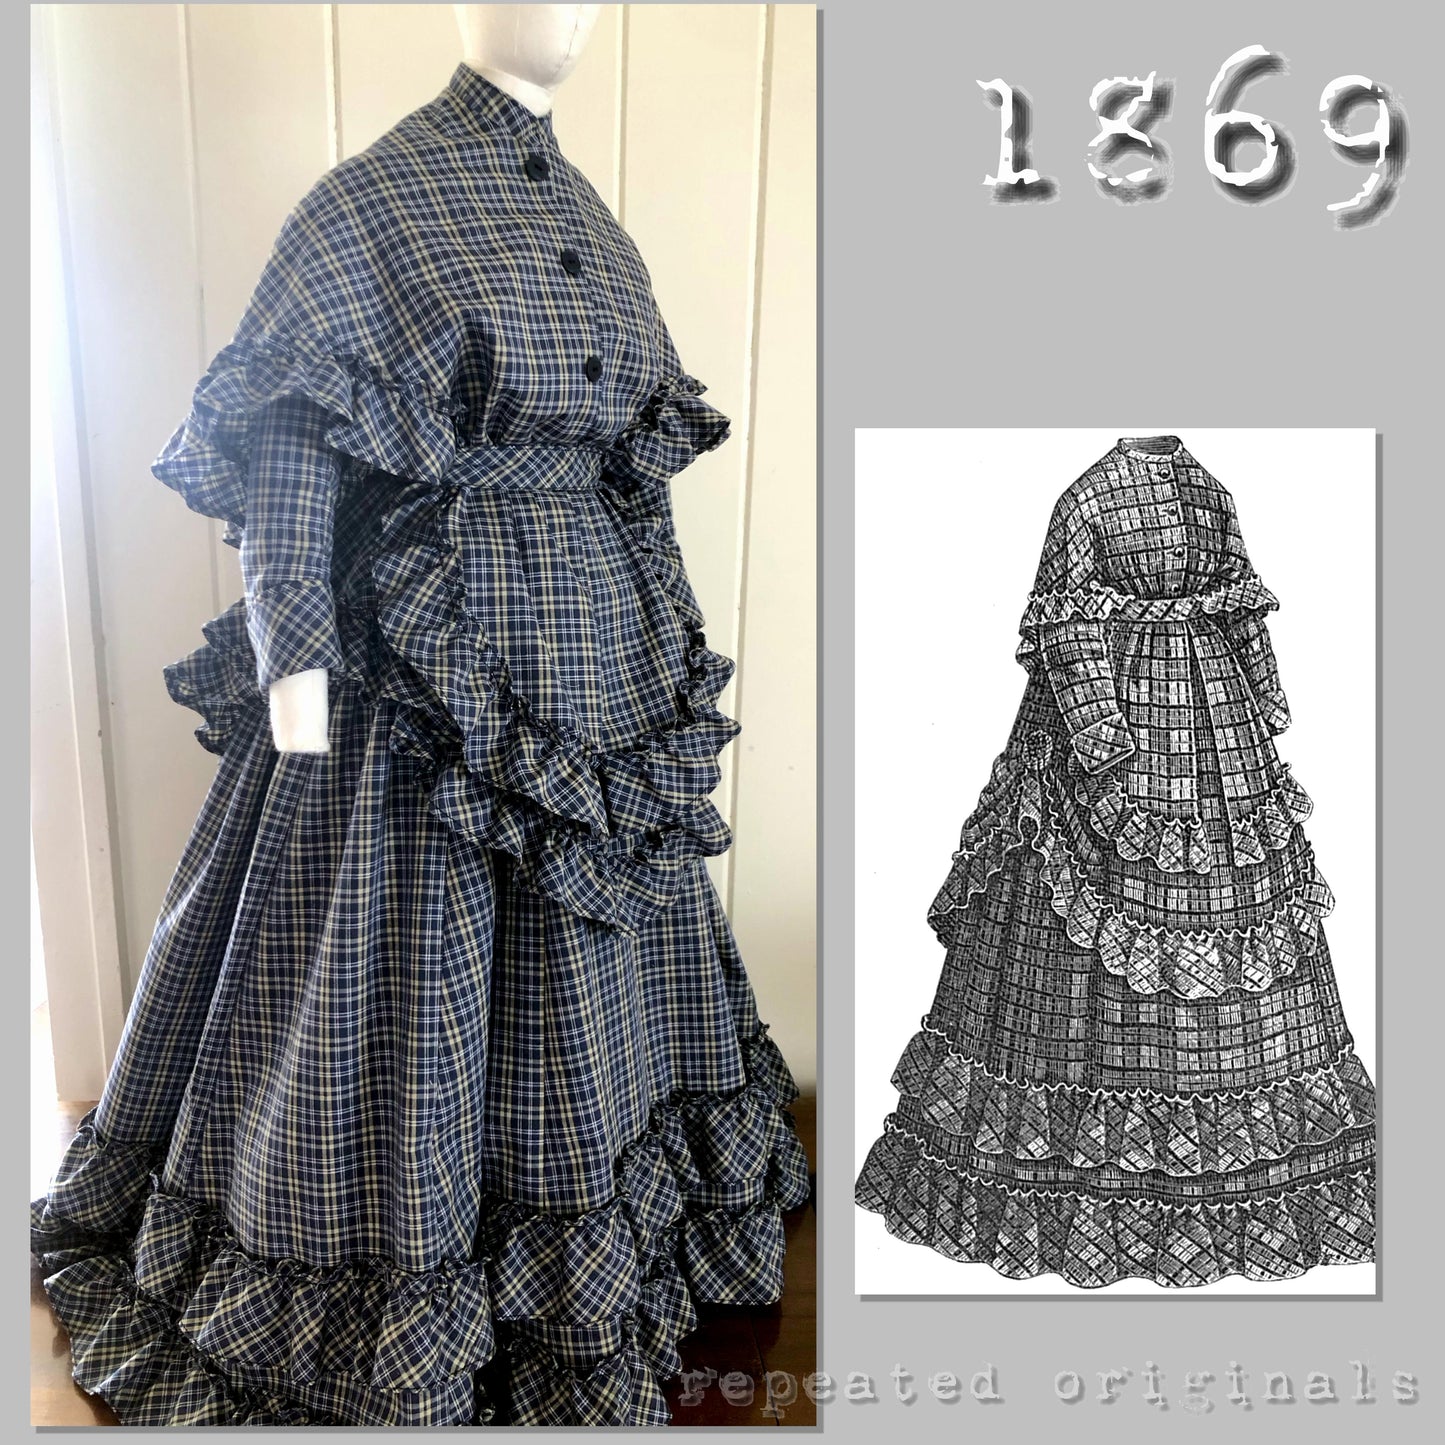 1869 Walking Dress Sewing Pattern - INSTANT DOWNLOAD PDF